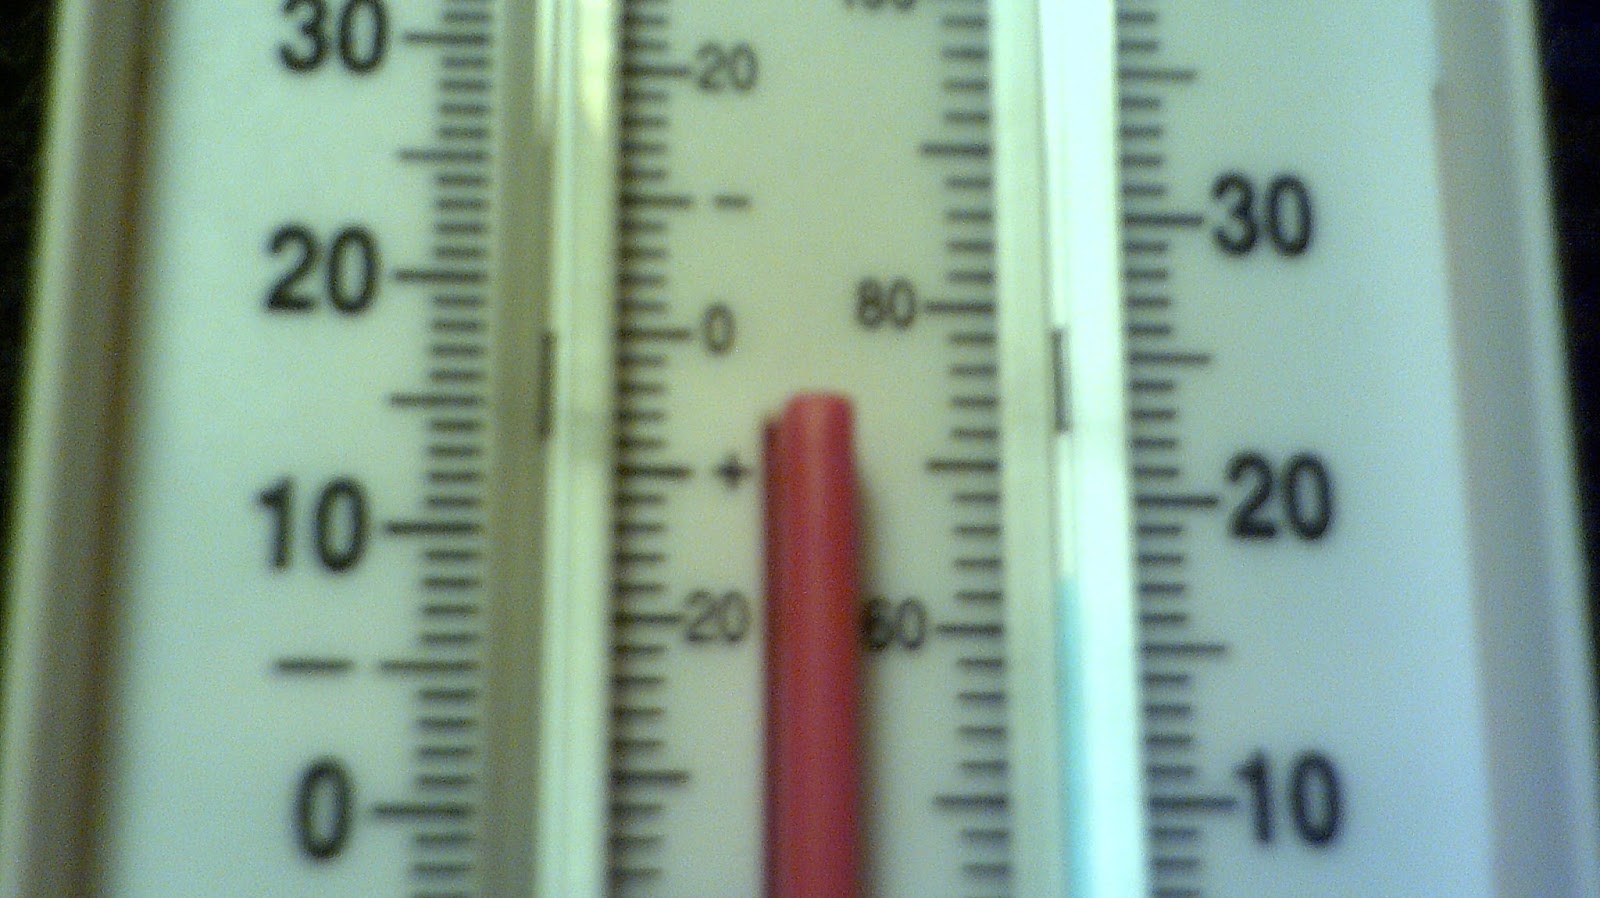 Maximum Thermometer - Mini Physics - Learn Physics